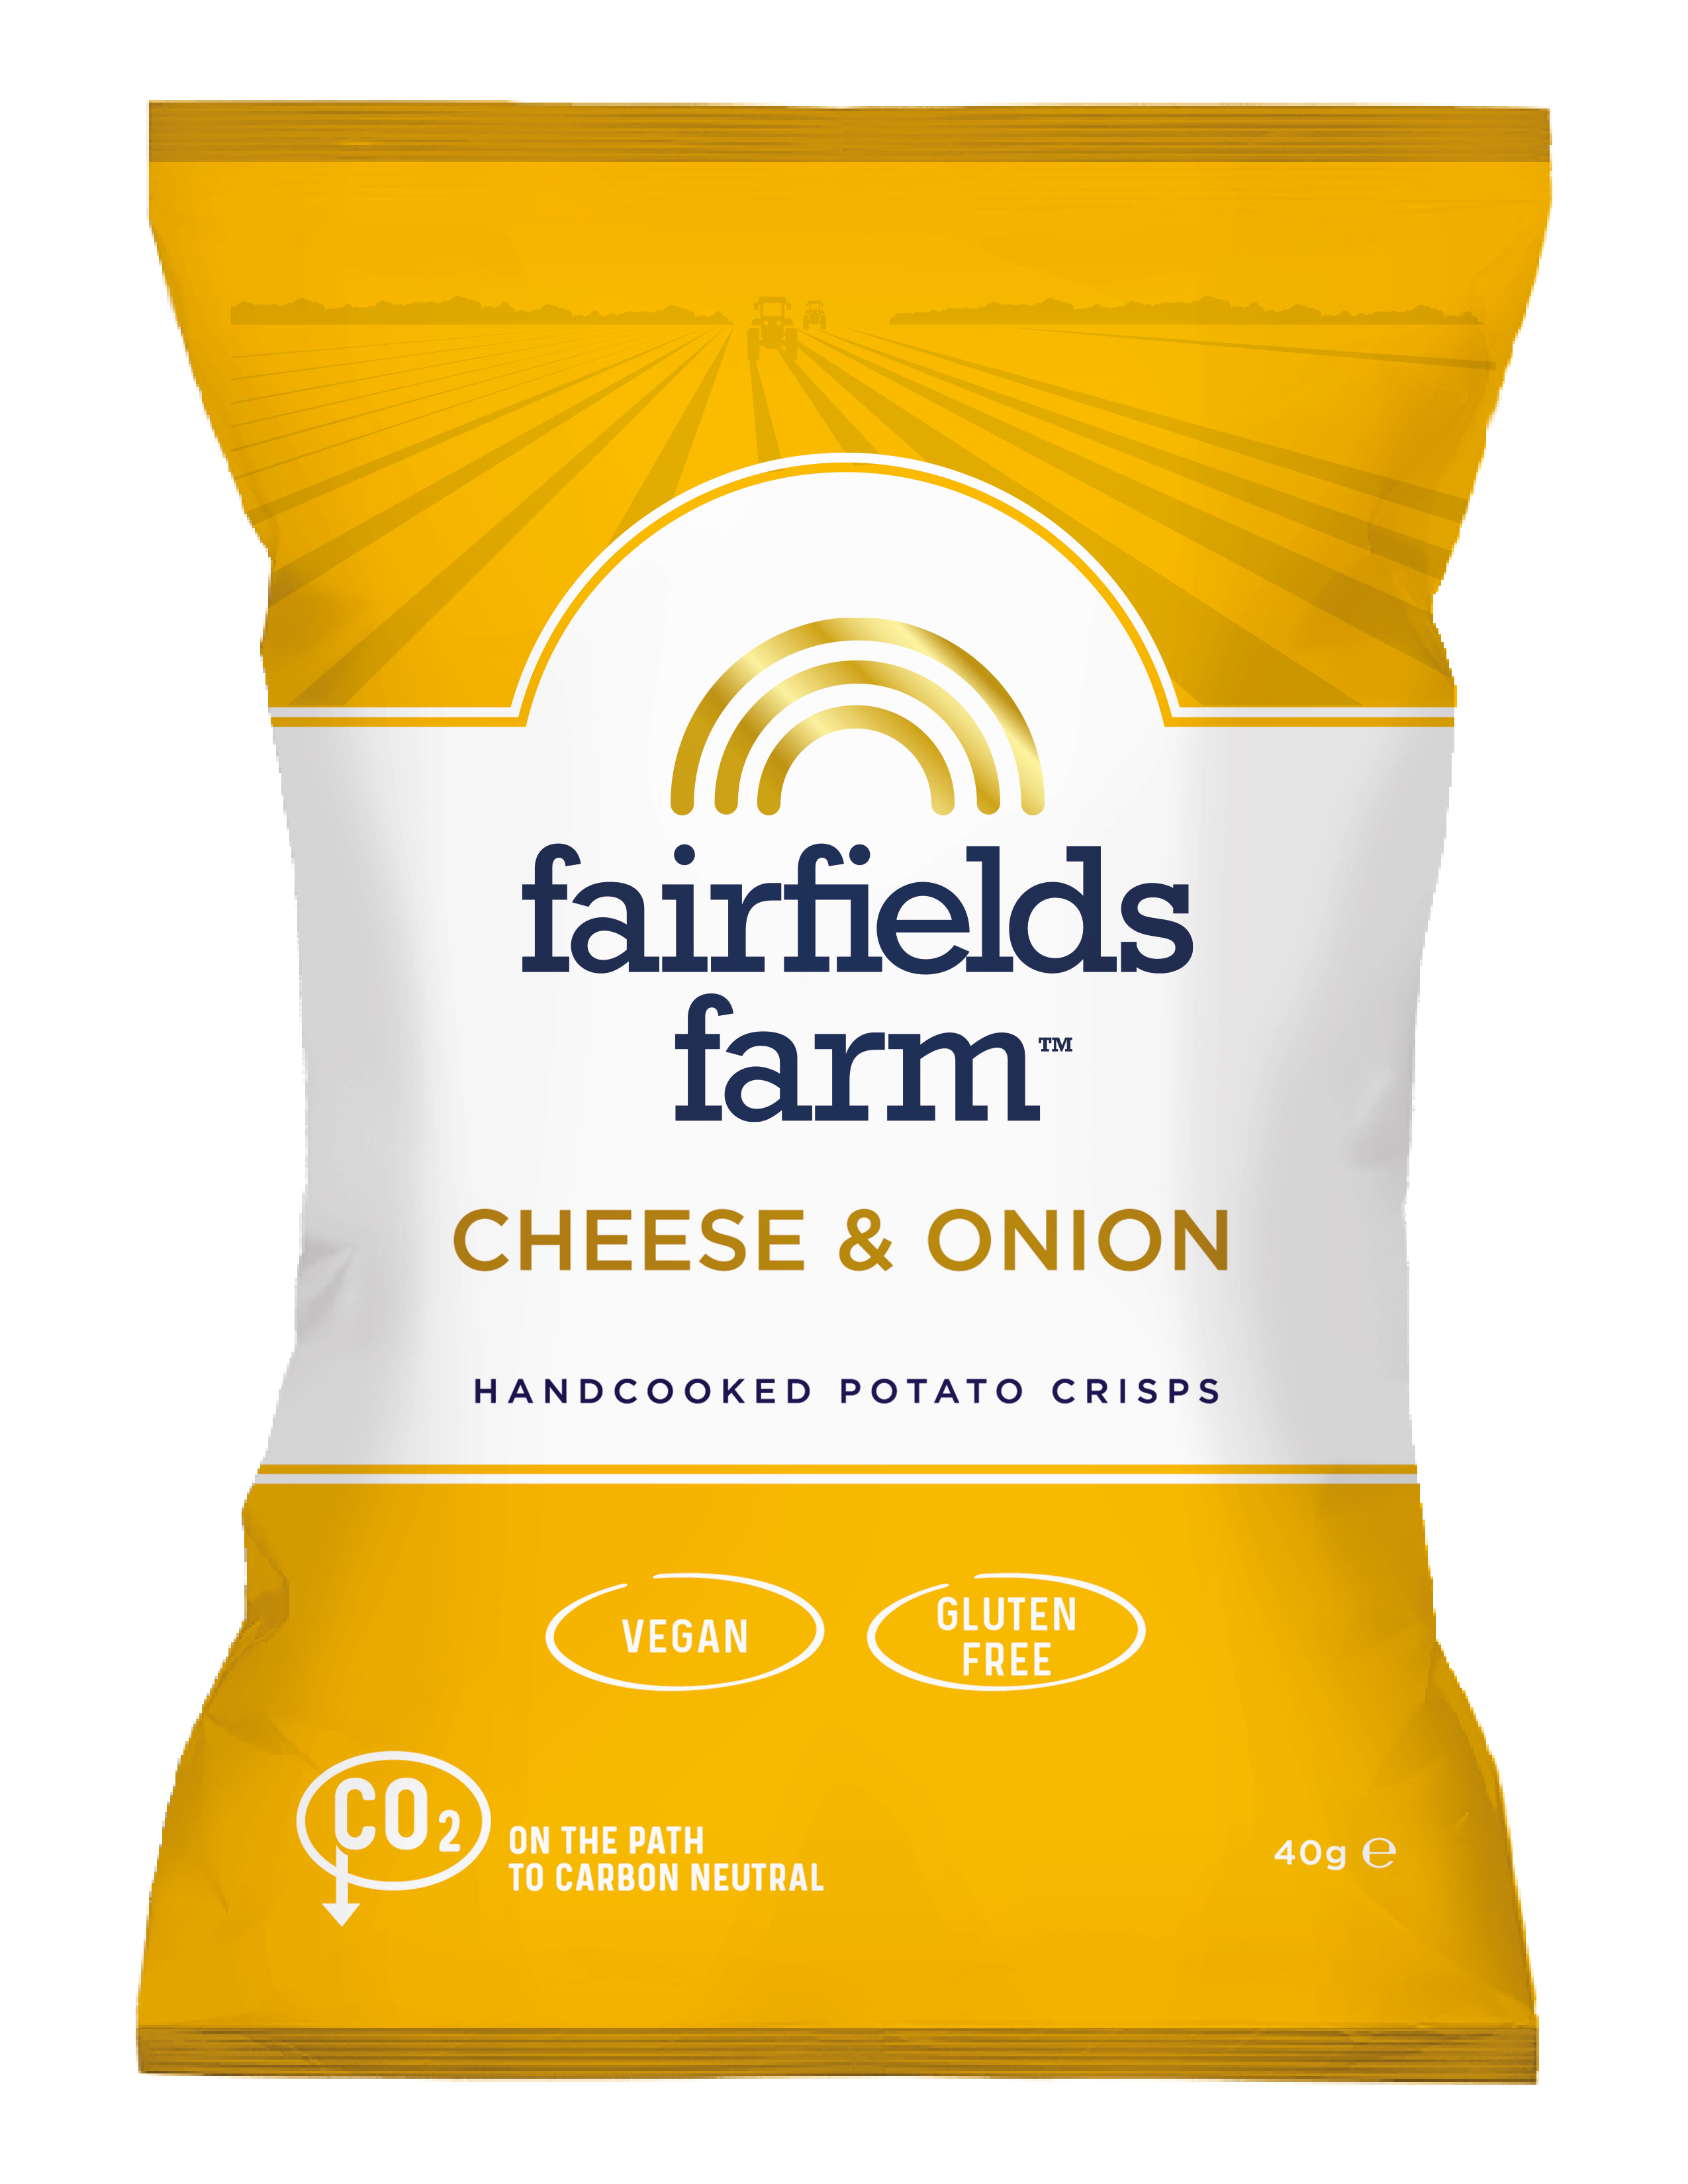 Fairfields Farm Goes 100% Vegan with new Vegan Cheese & Onion crisps